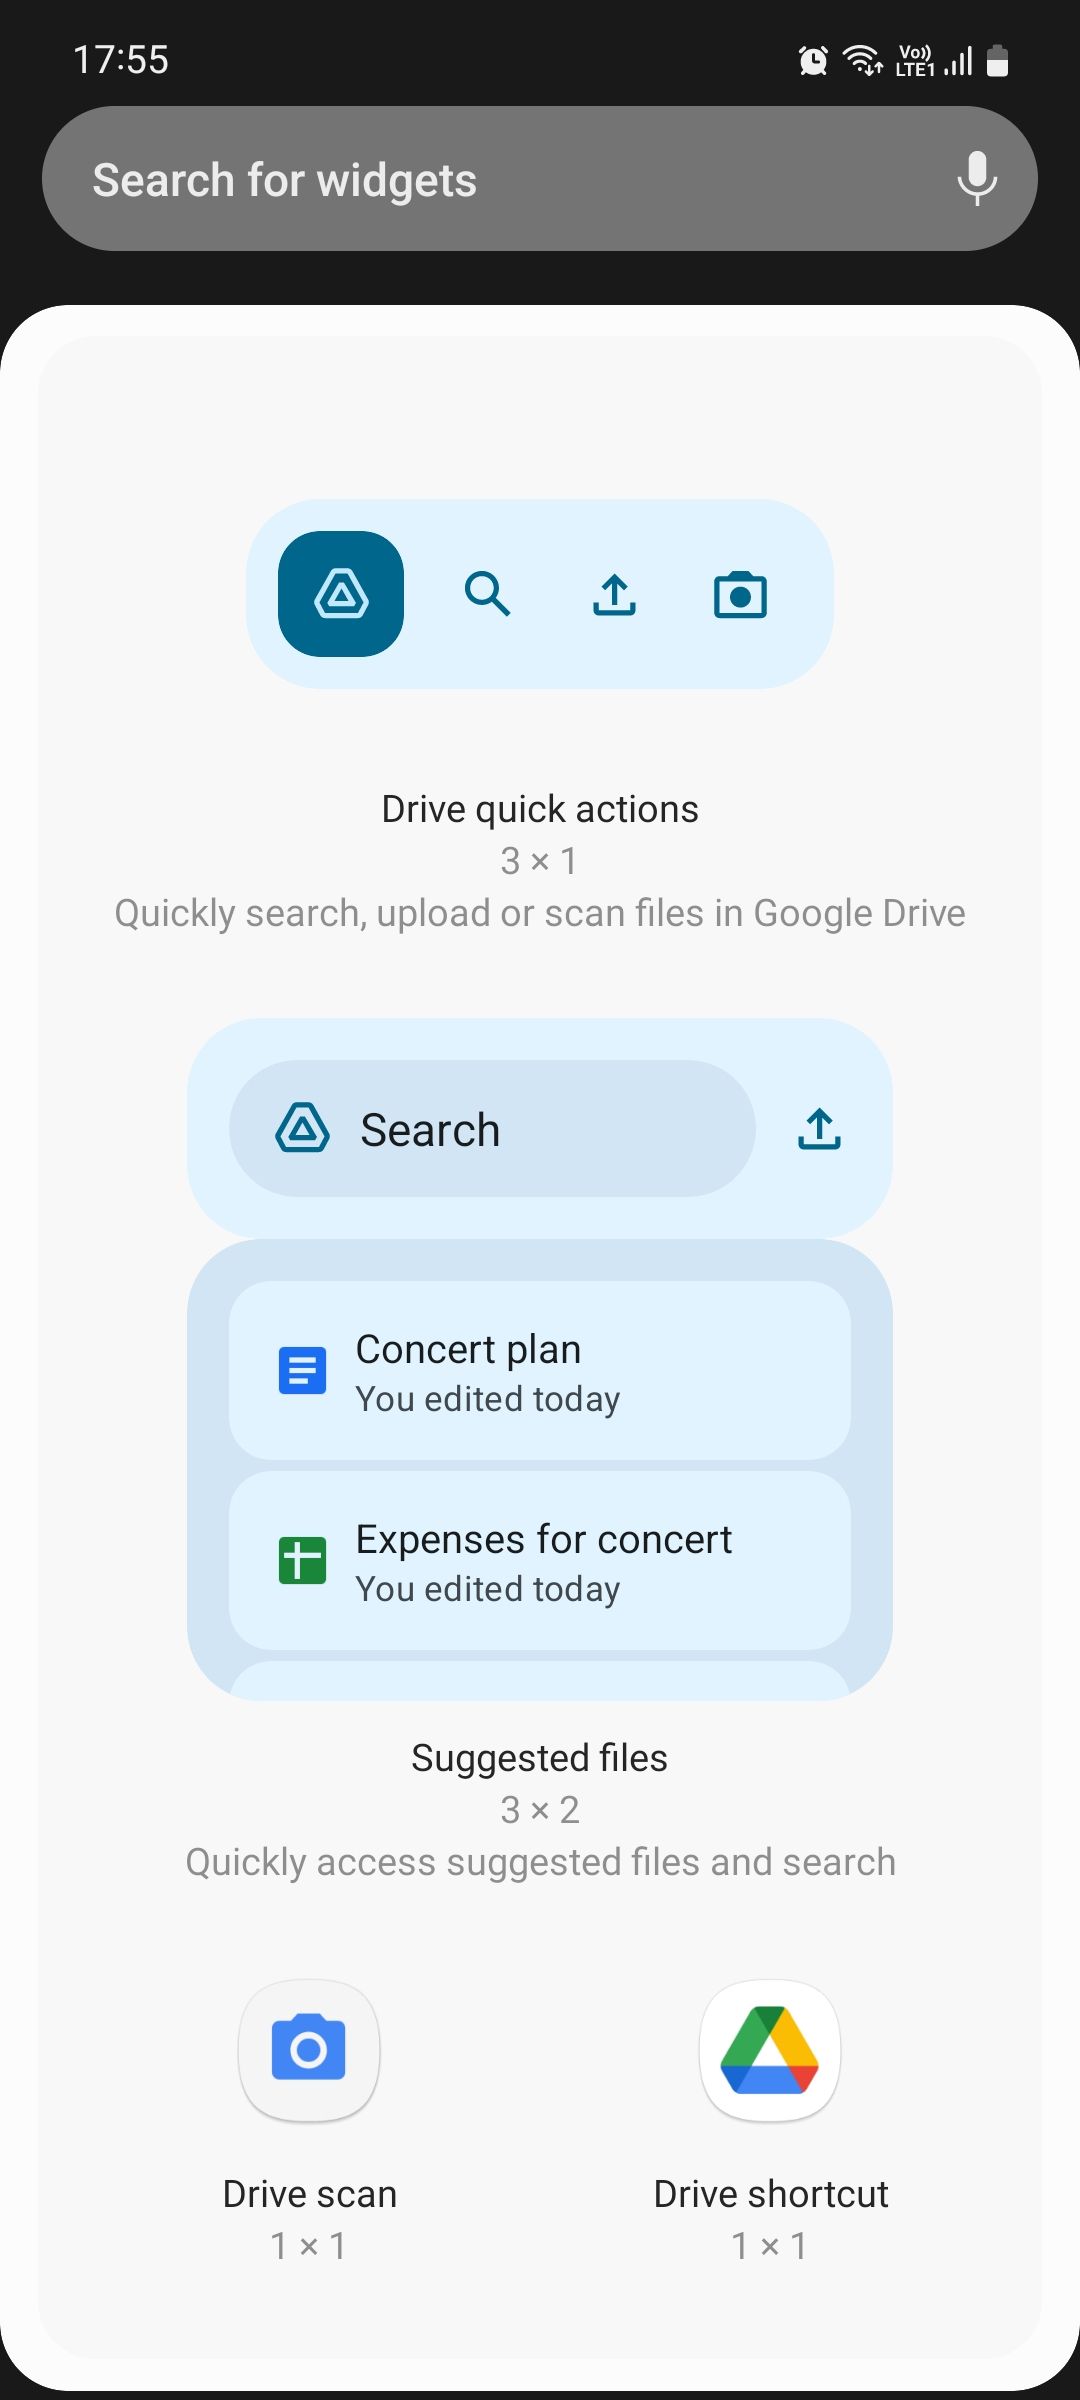 Google Drive widgets